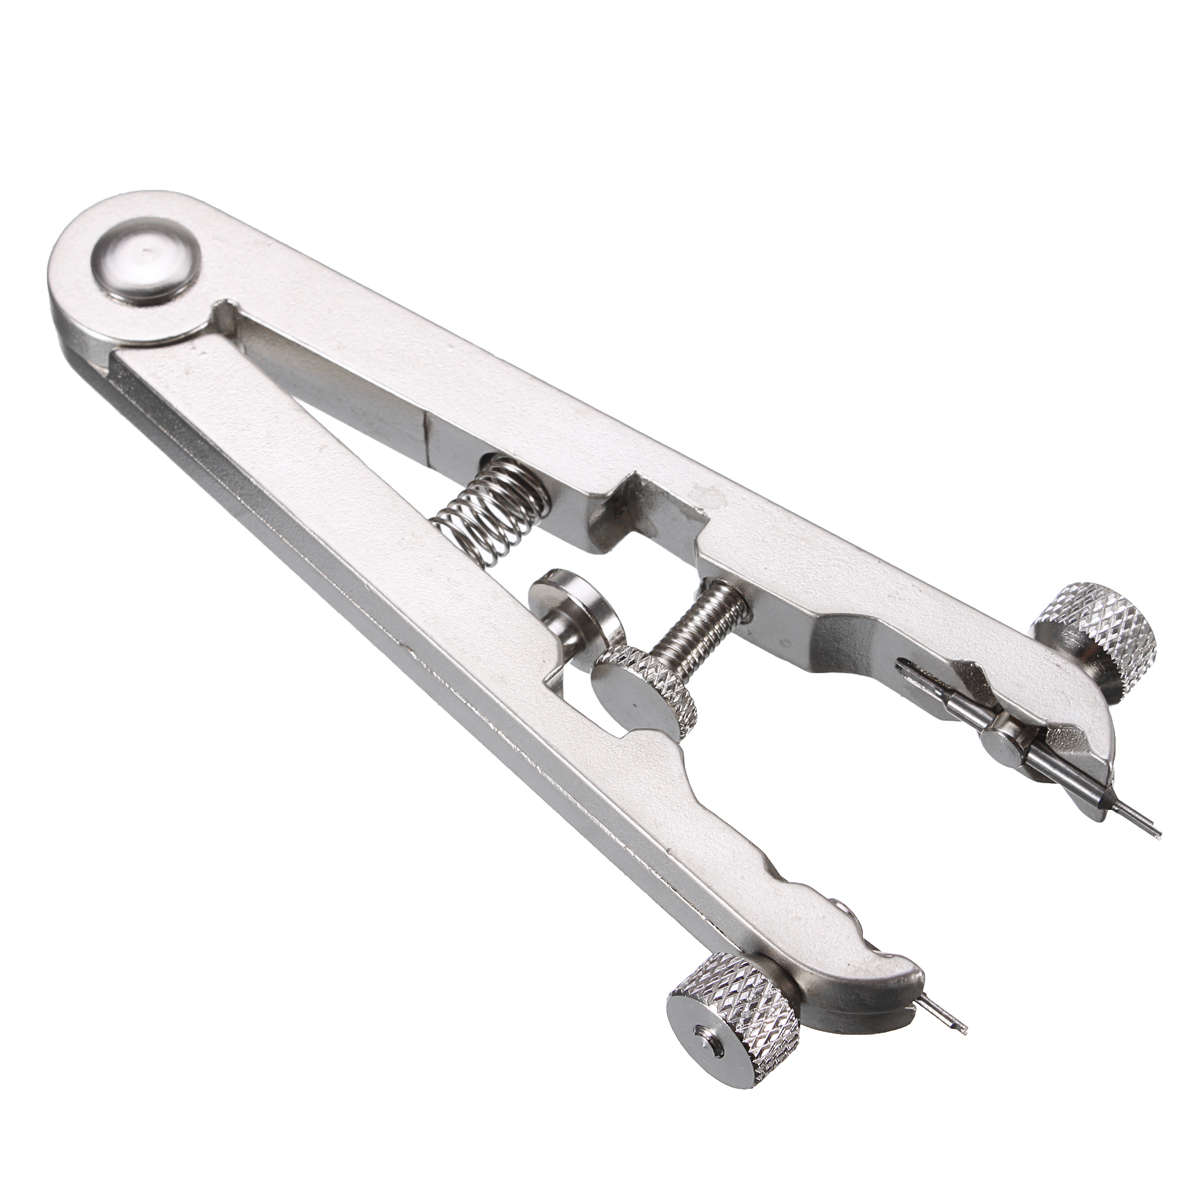 Bracelet-Spring-Bar-Remover-Watch-Tweezer-Strip-Replace-Tool-For-ROLEX-6825-1183855-6